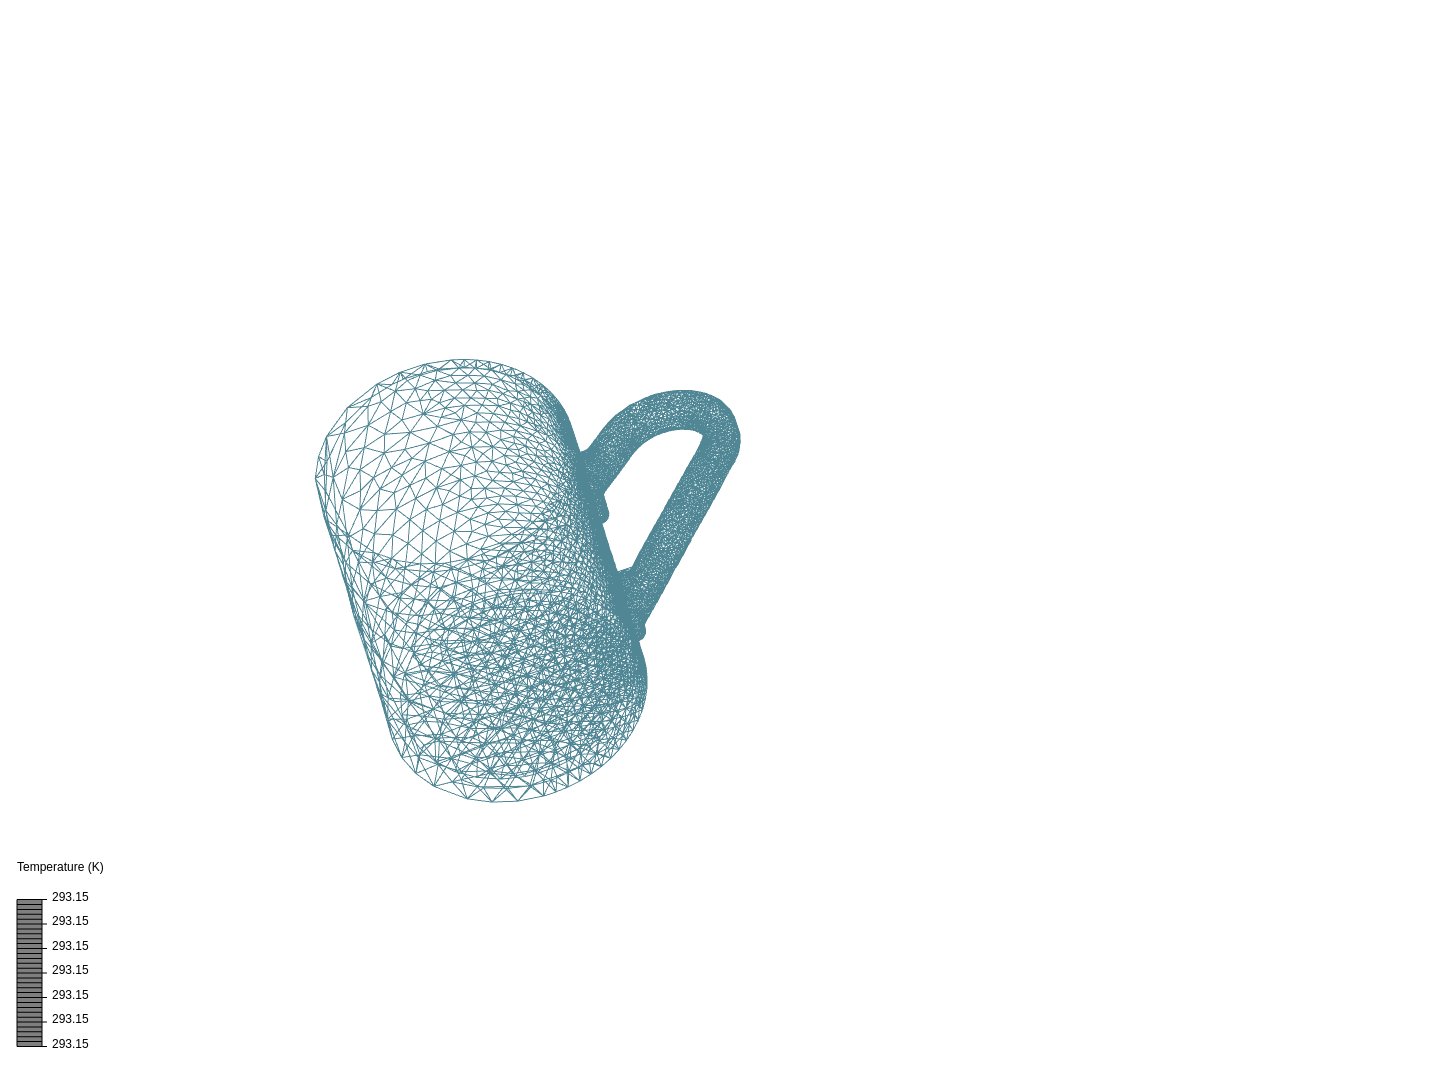 Heat cup image